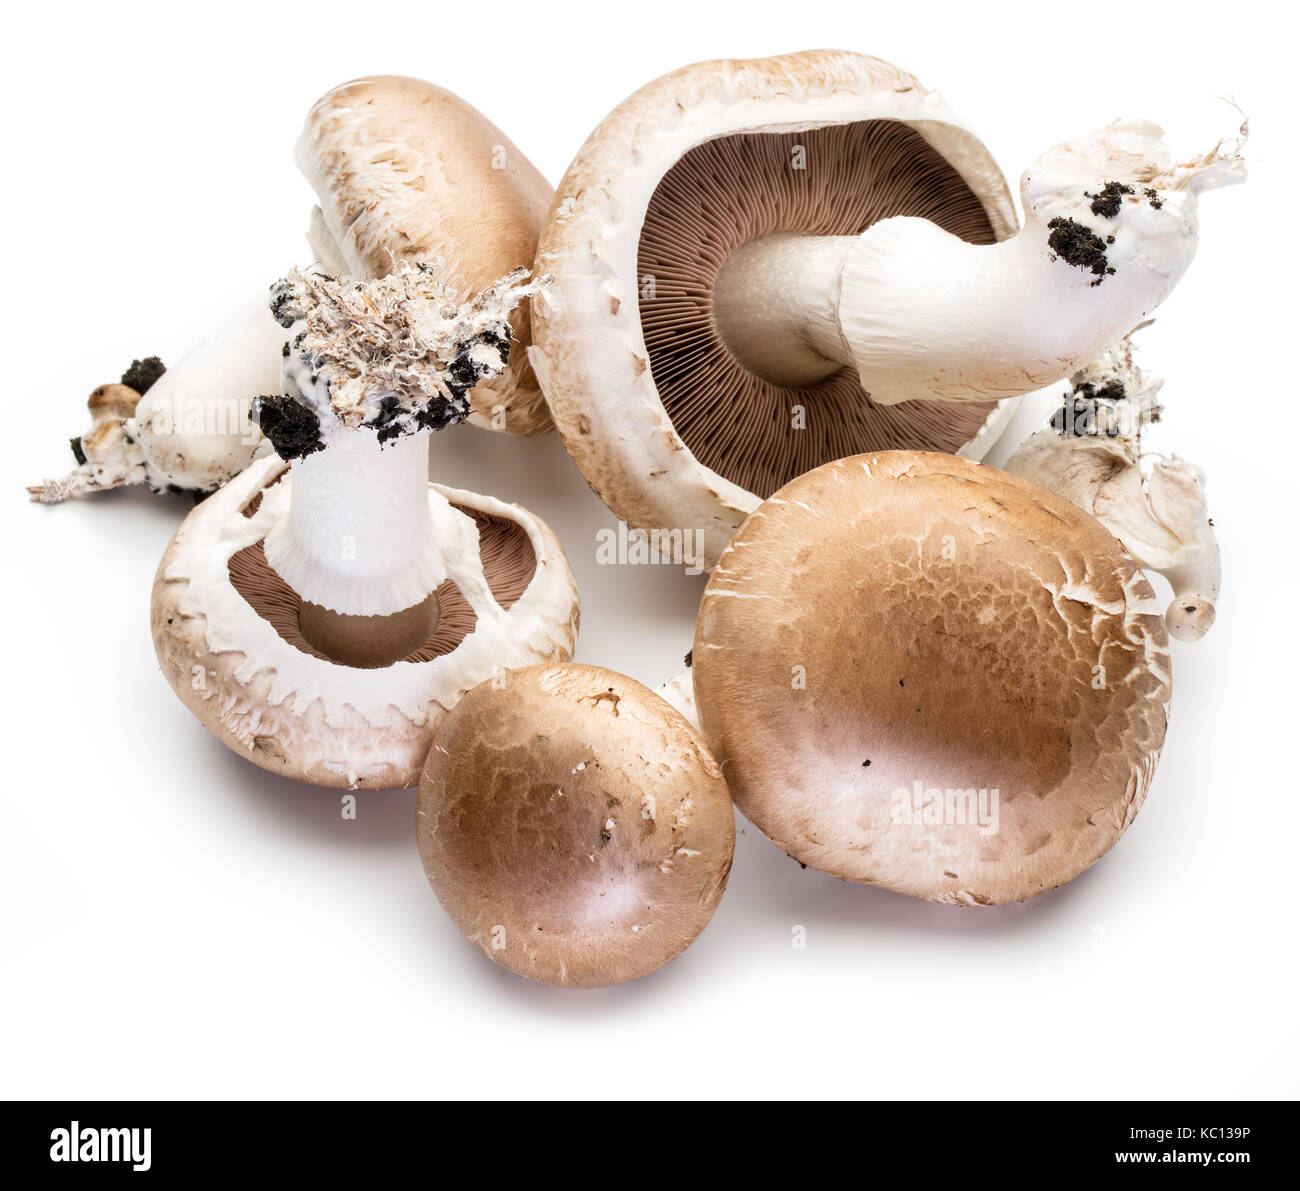 Champignon mushrooms on the white background. Stock Photo